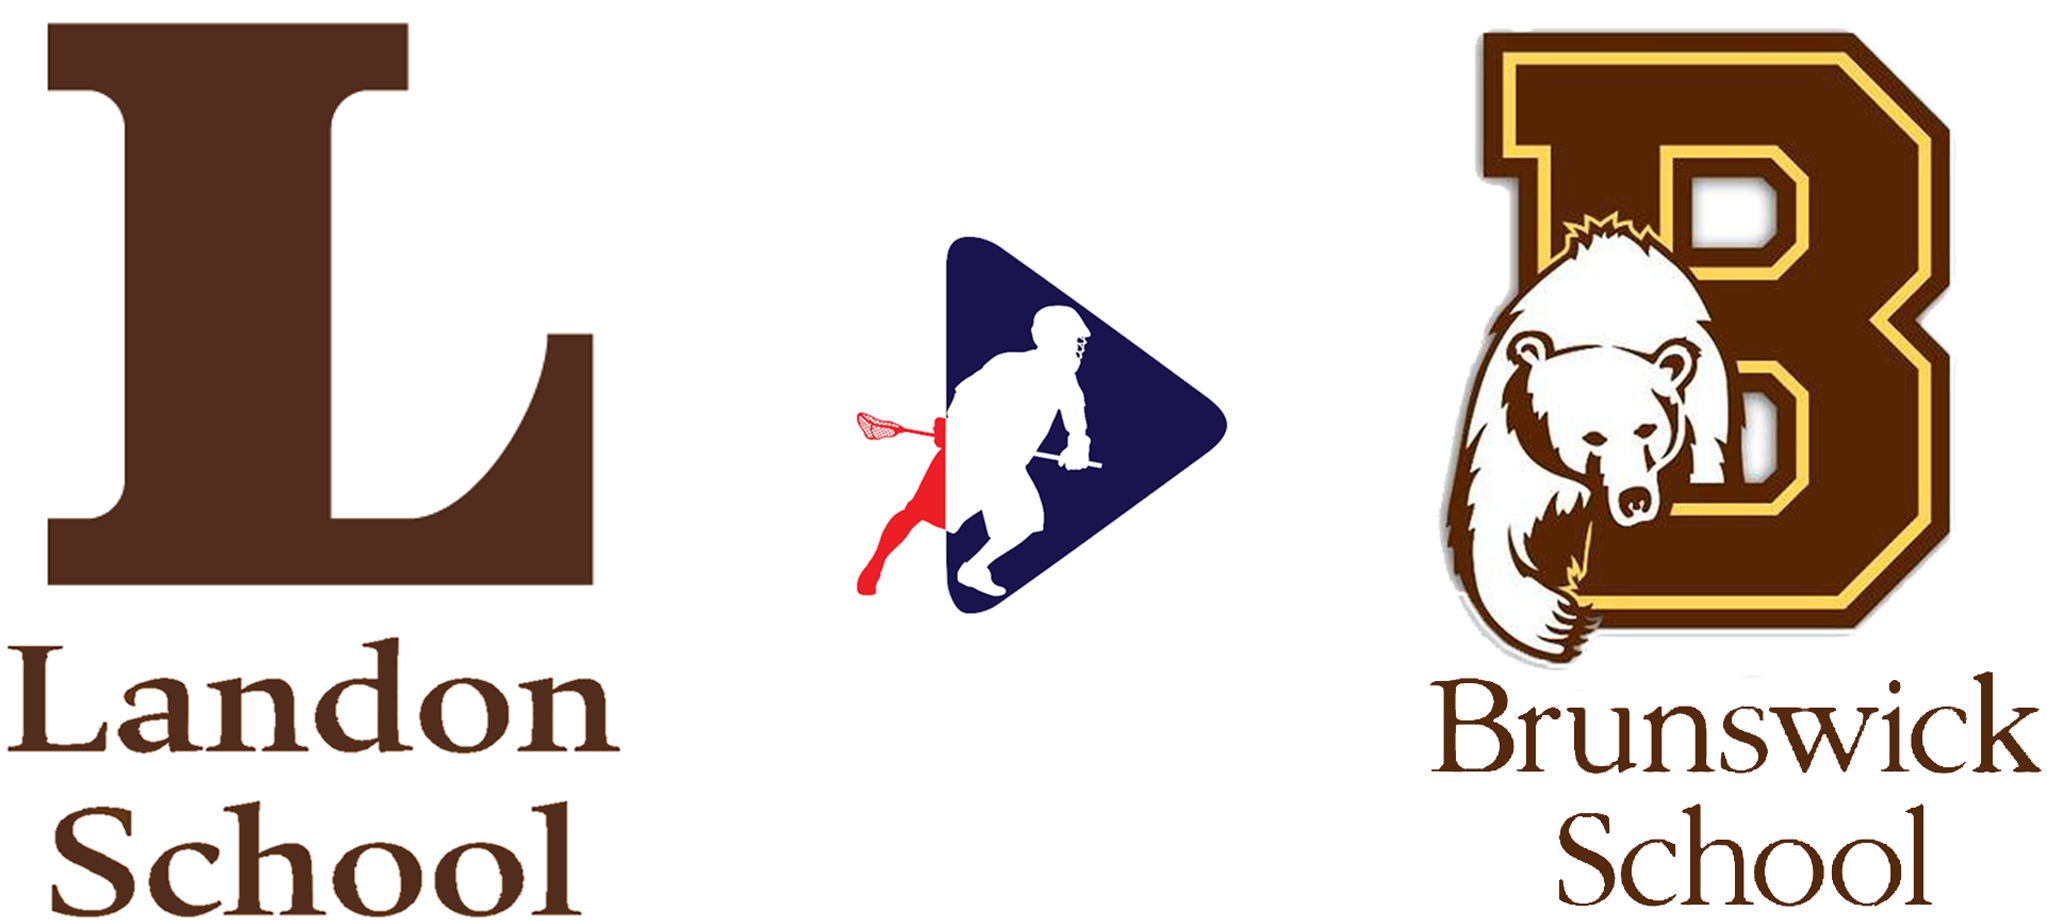 Landon Vs Brunswick Lax Logo - Brunswick School (2500x1200)